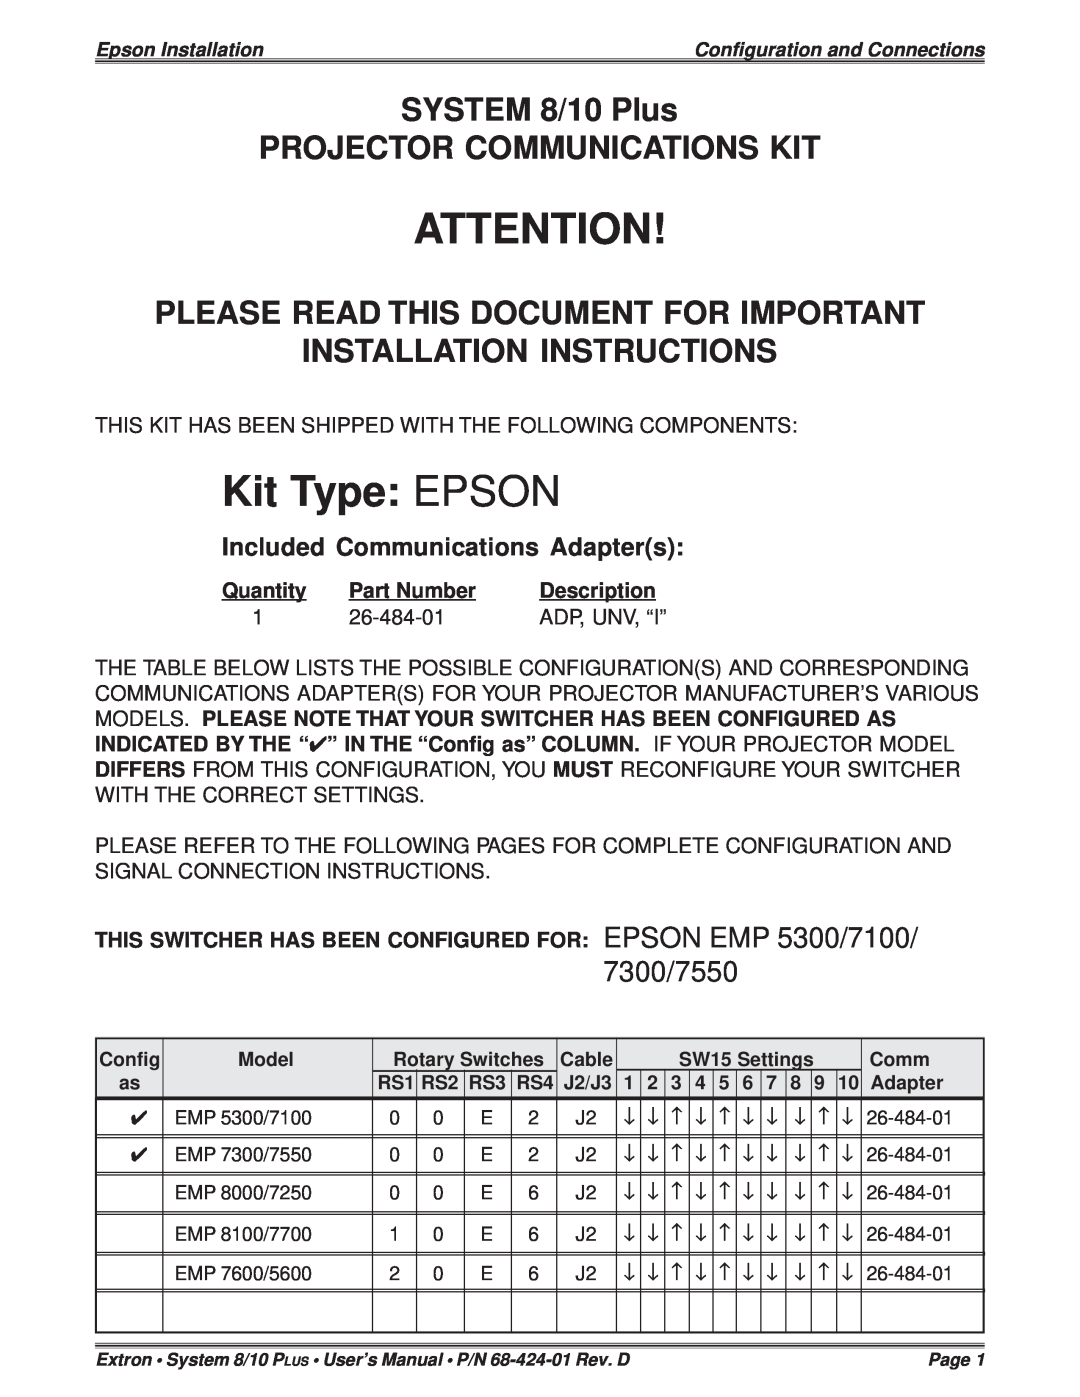 Epson installation instructions Kit Type: EPSON, SYSTEM 8/10 Plus PROJECTOR COMMUNICATIONS KIT, 7300/7550, Quantity 